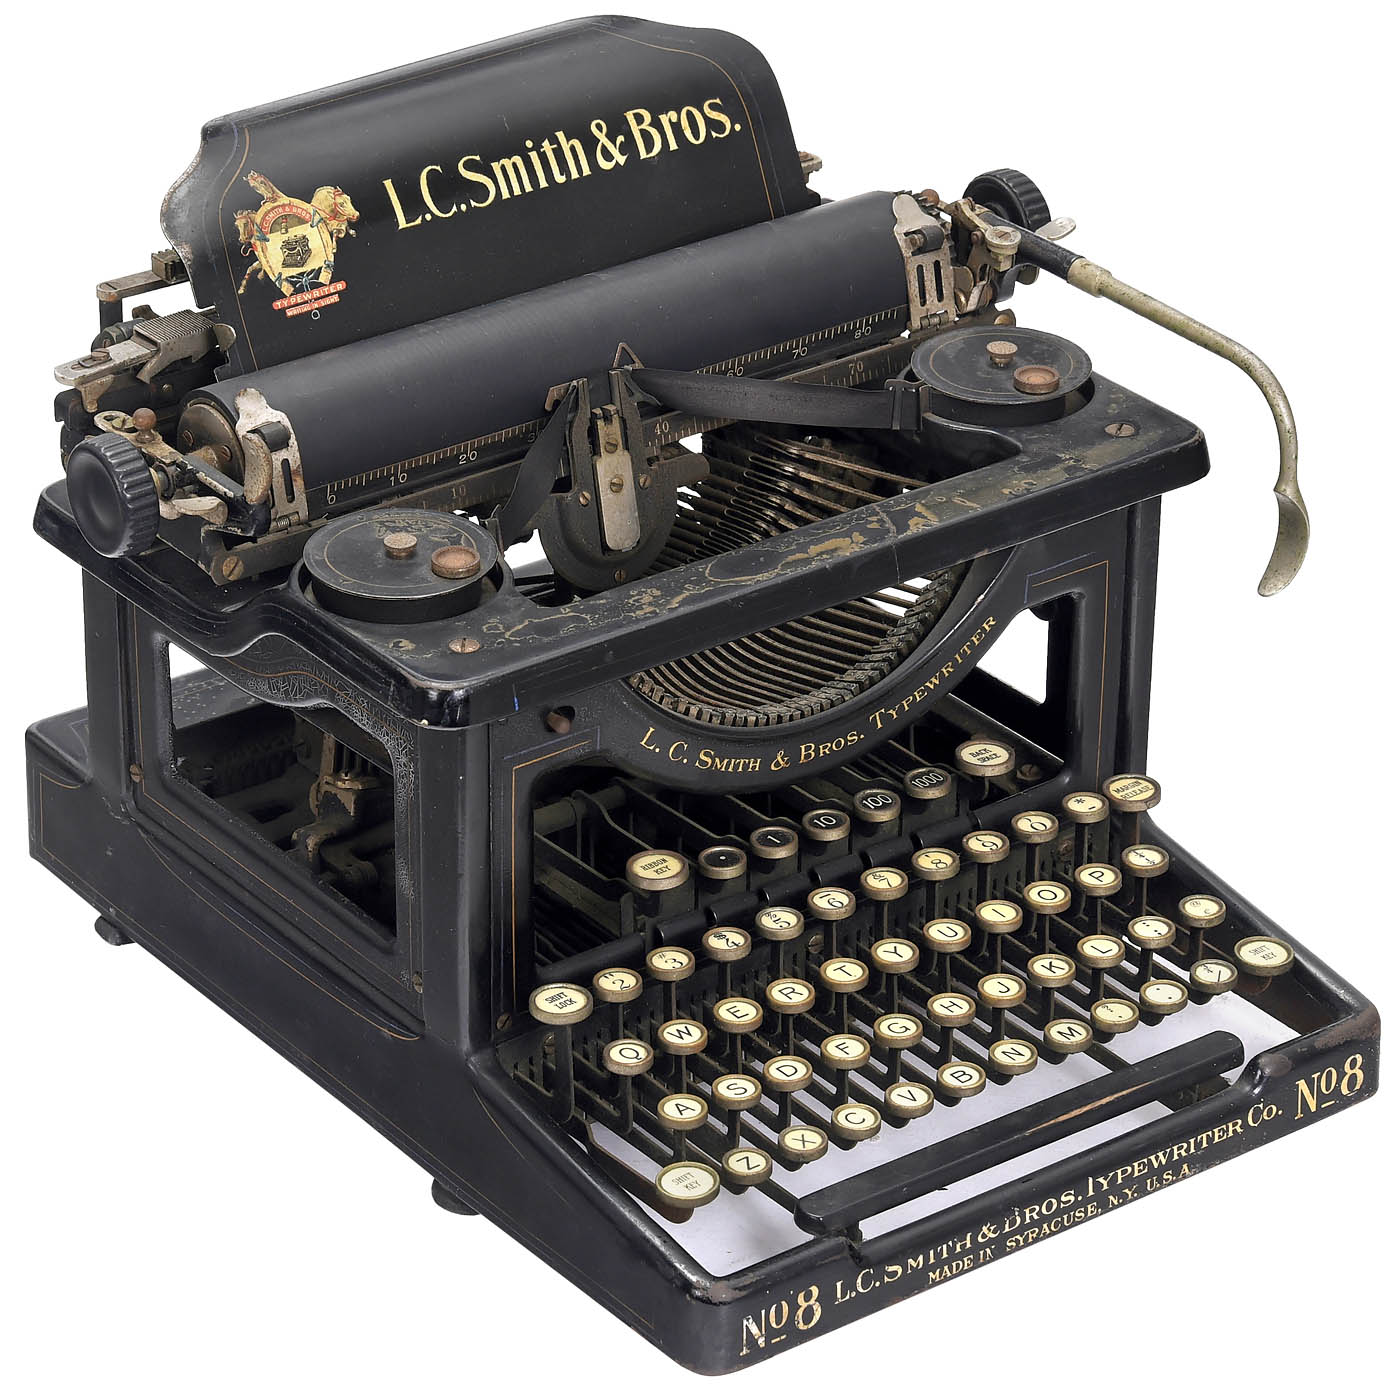 4 American Typewriters - Image 4 of 5